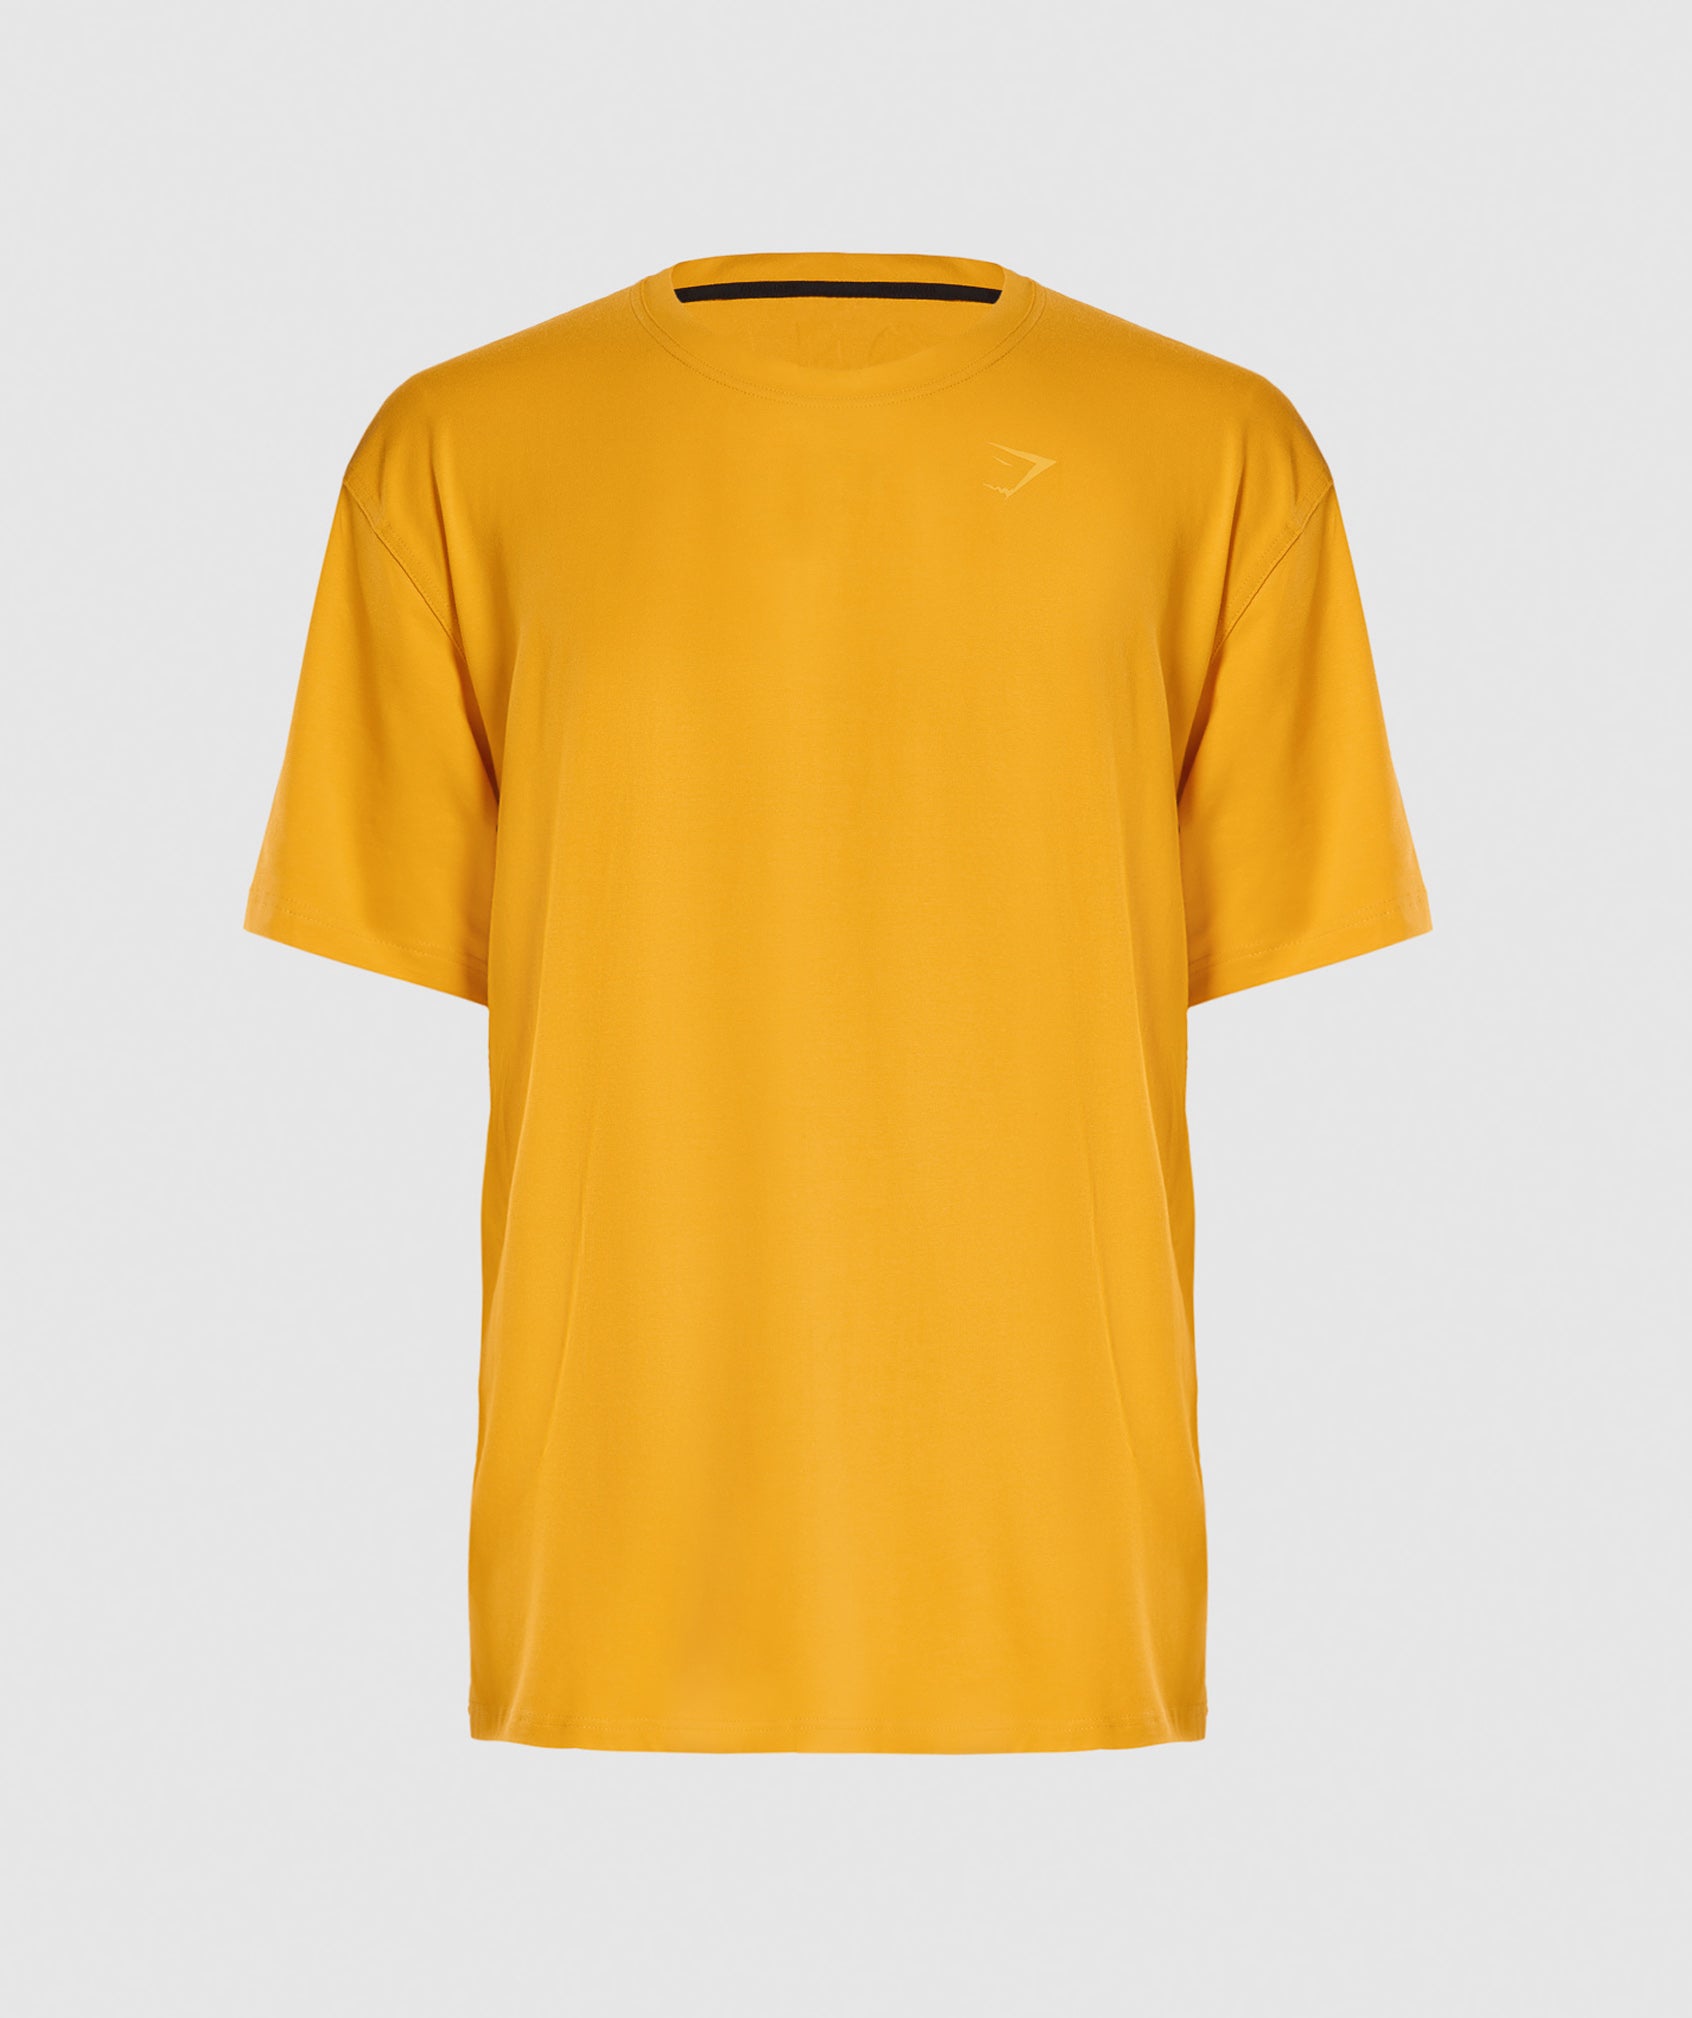 Power T-Shirt in Sunny Yellow